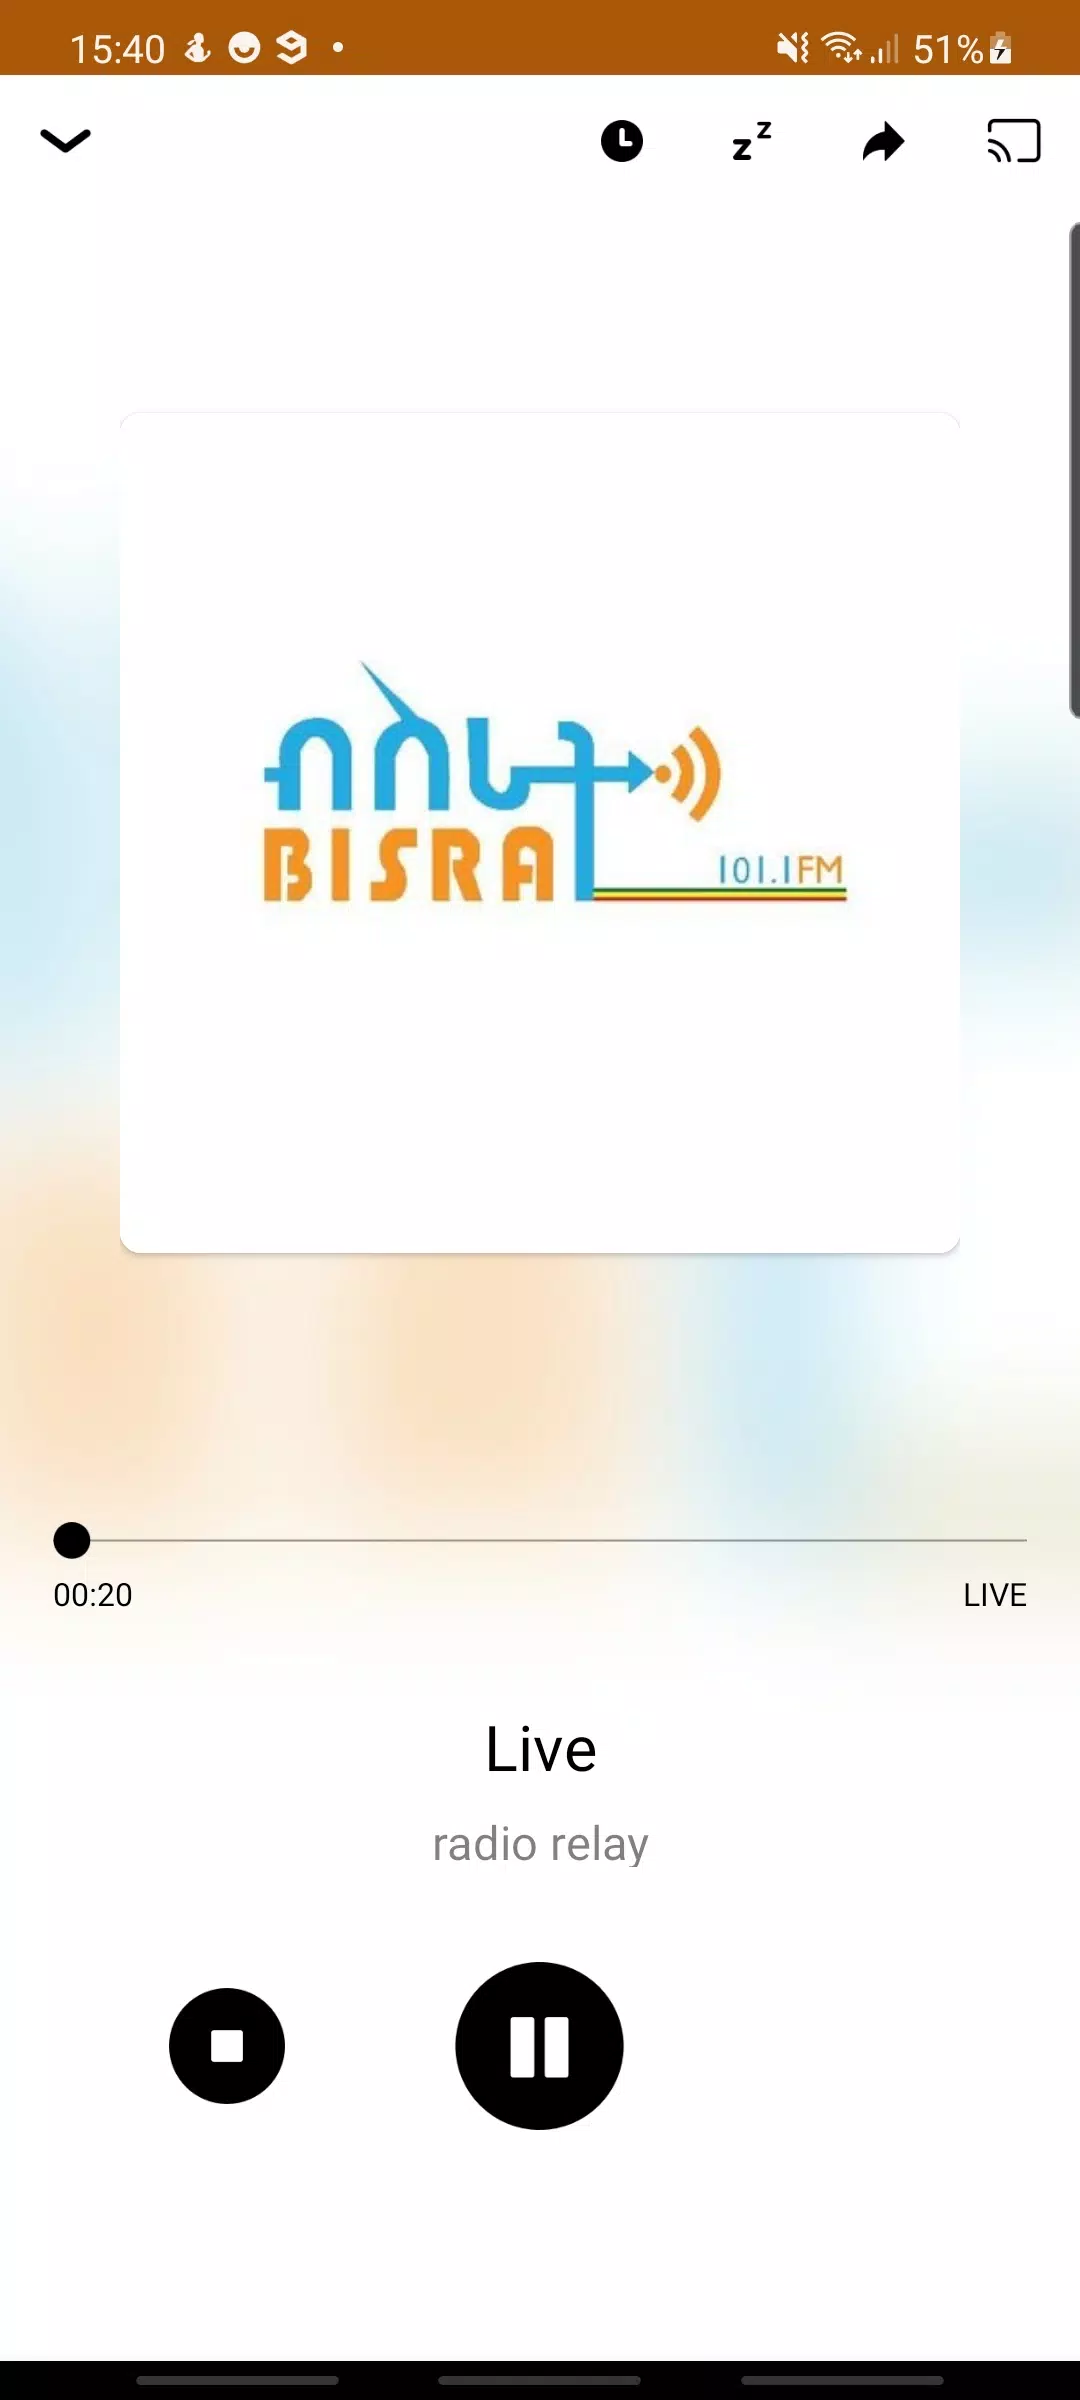 Bisrat Radio for Android - APK Download